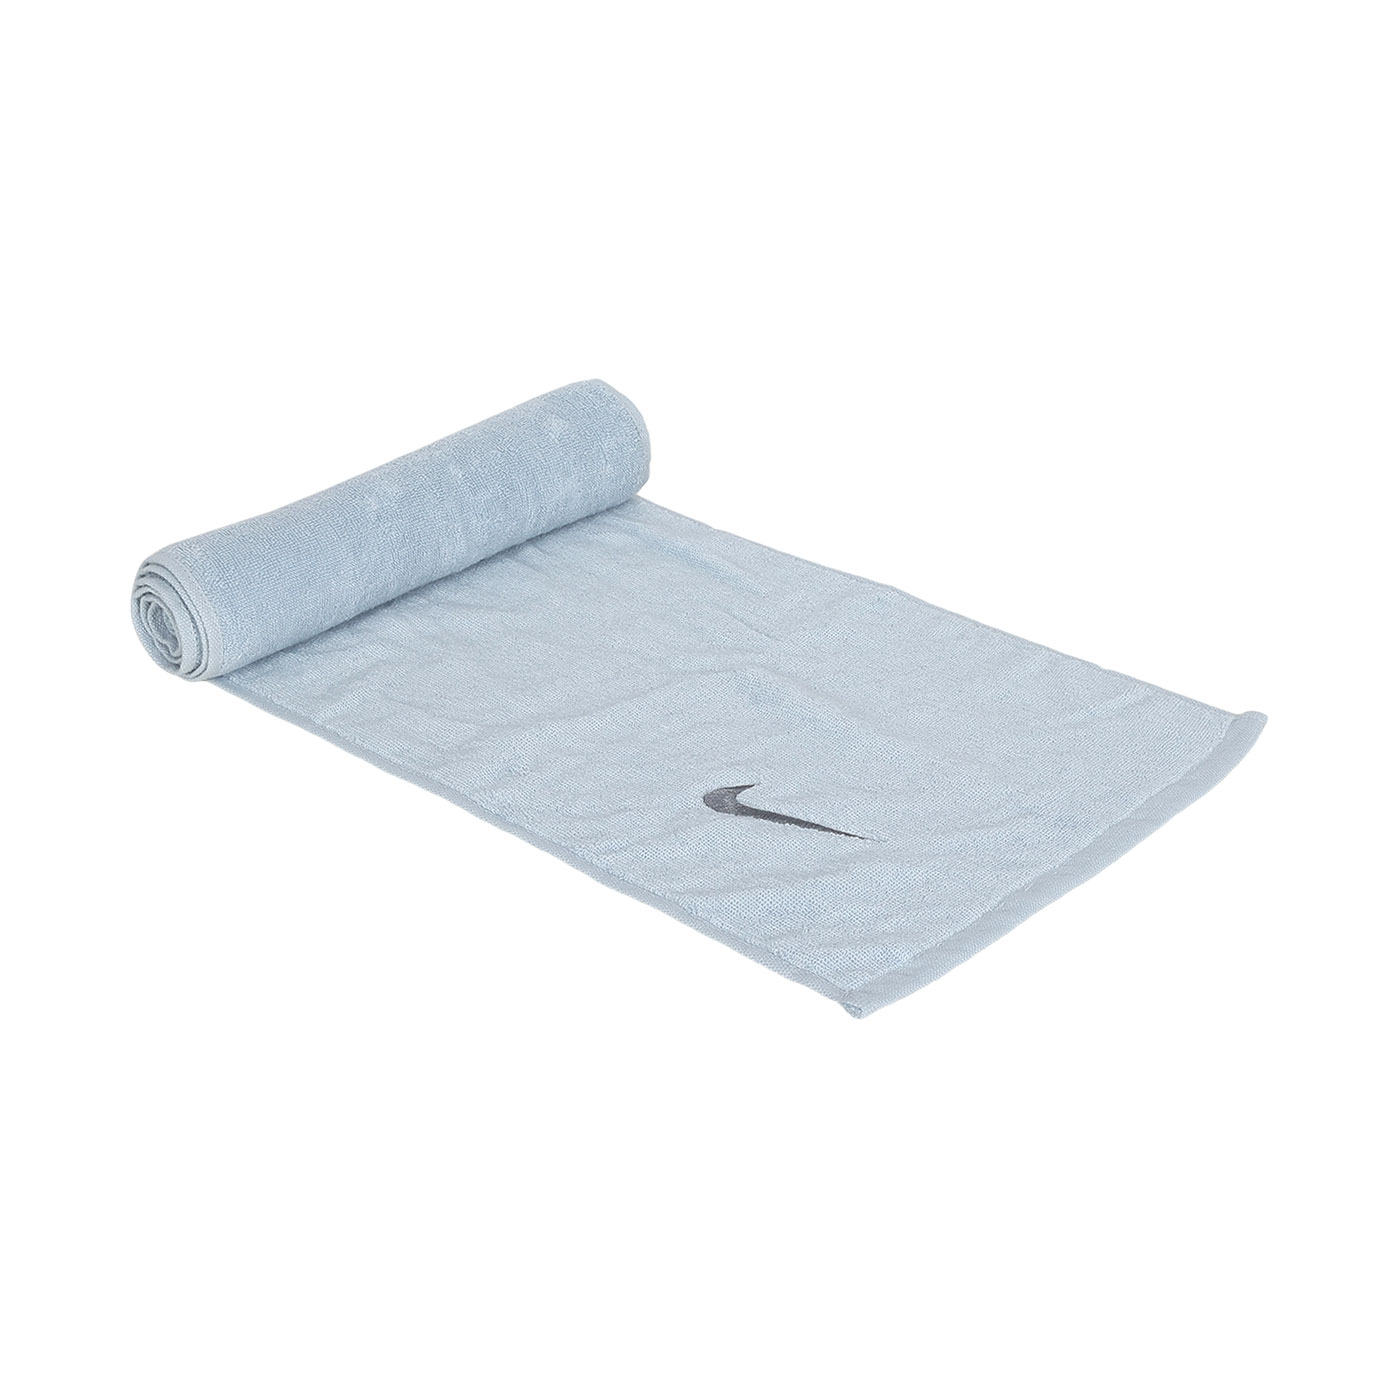 NIKE SOLID CORE 長型毛巾(120x25cm)  N1001540409NS